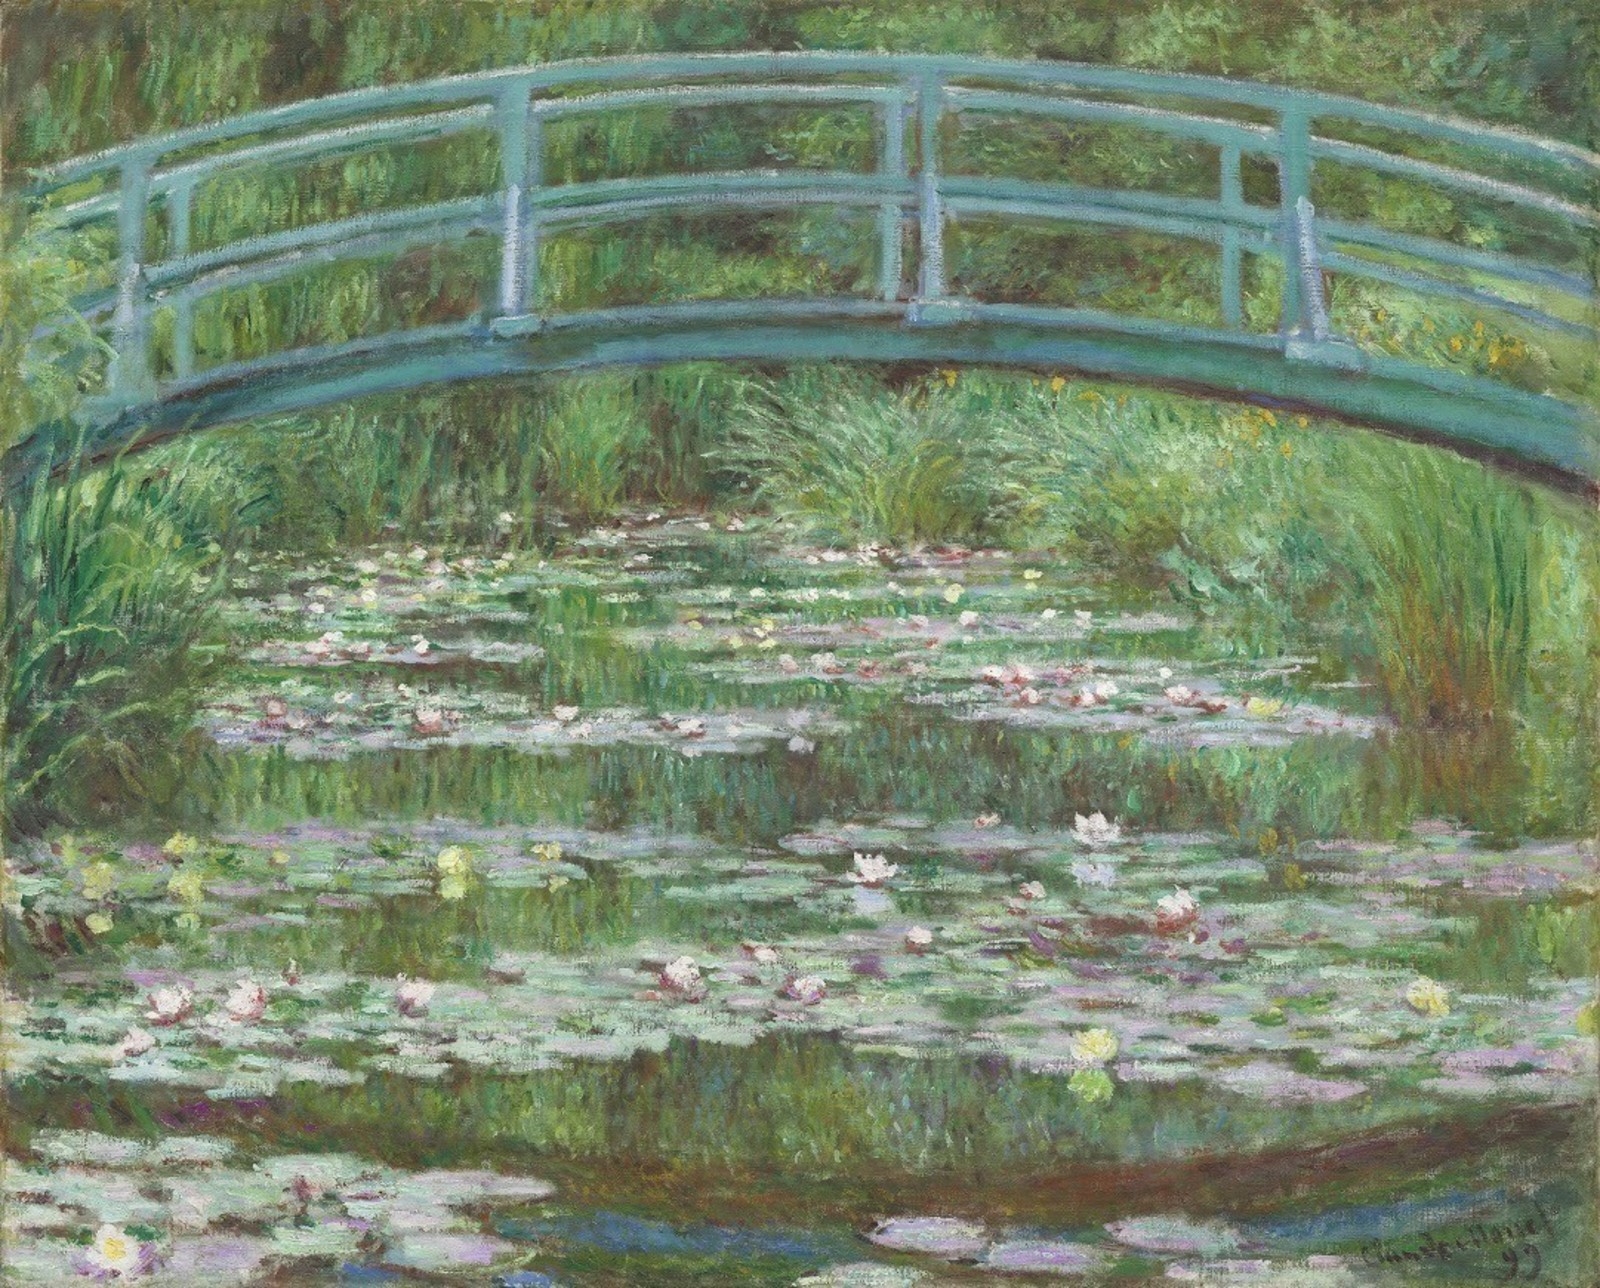 Claude Monet, Waterlily Pond, Green Harmony,1899, oil on canvas, 89 x 93 cm Musée d'Orsay, Paris, France